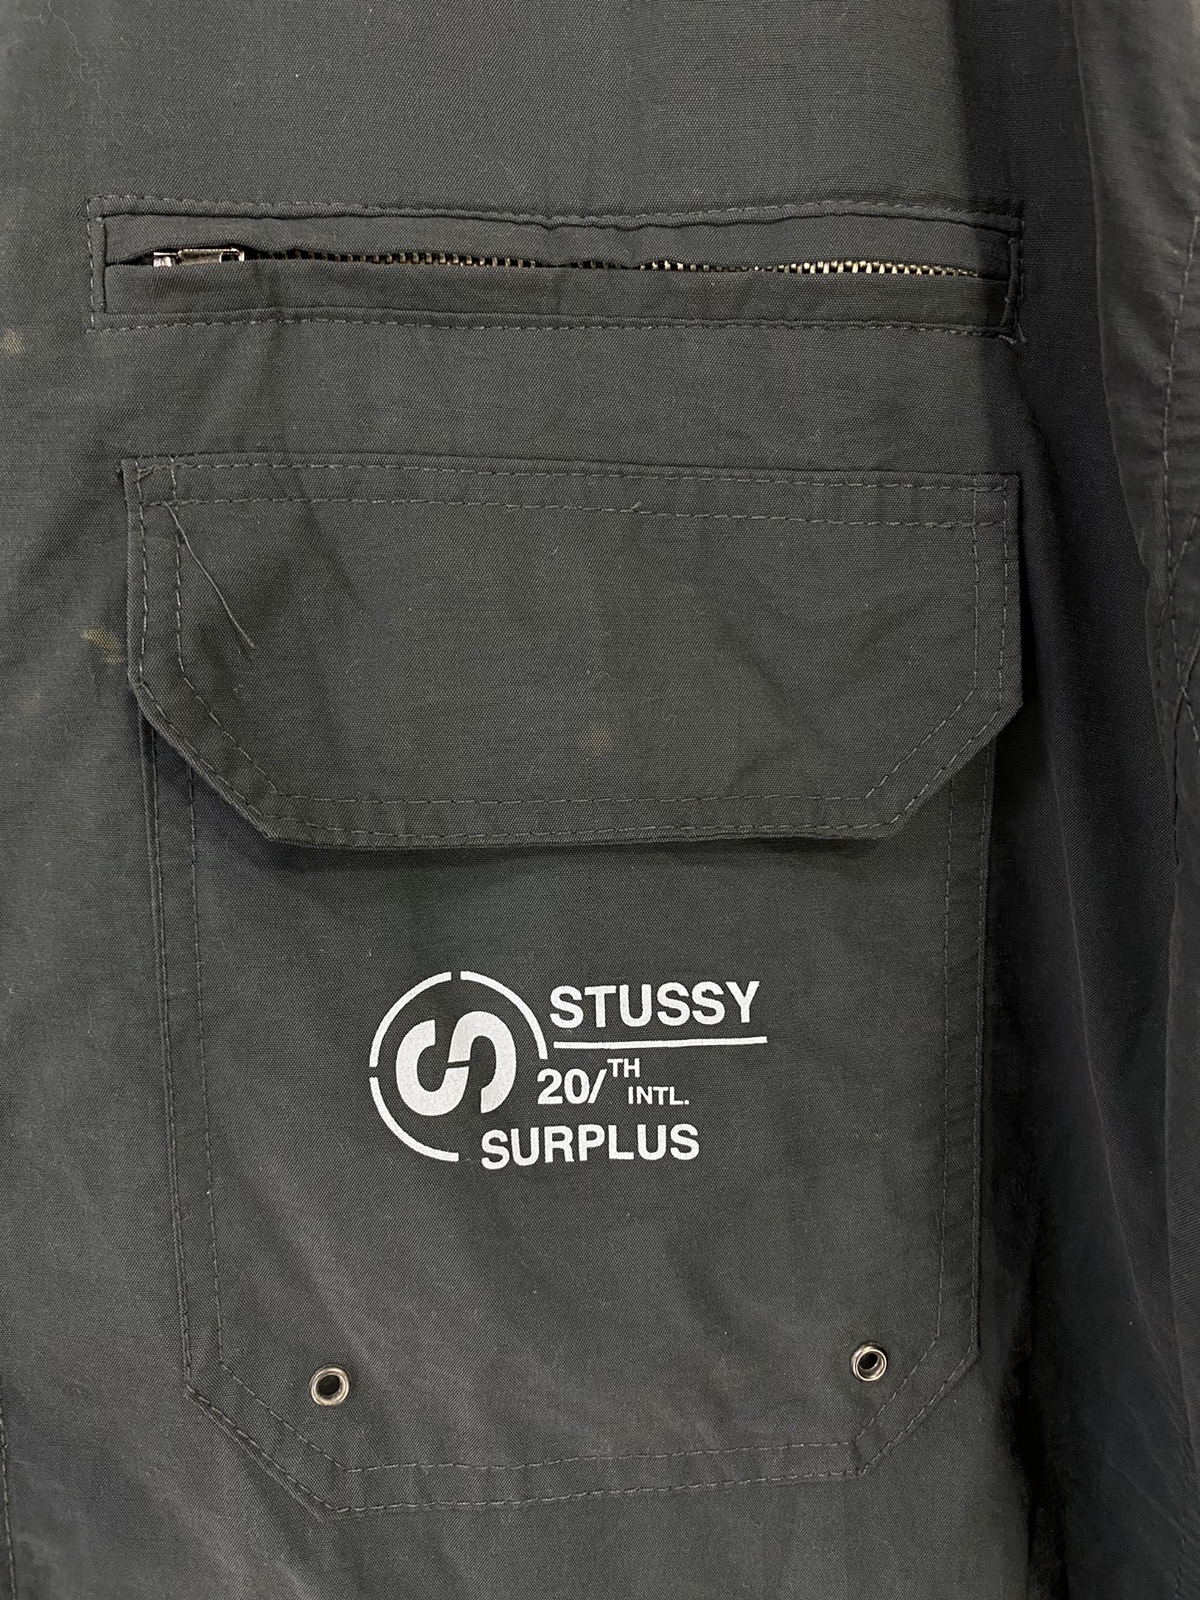 Vintage Stussy Surplus Button Up Jacket Design - 4